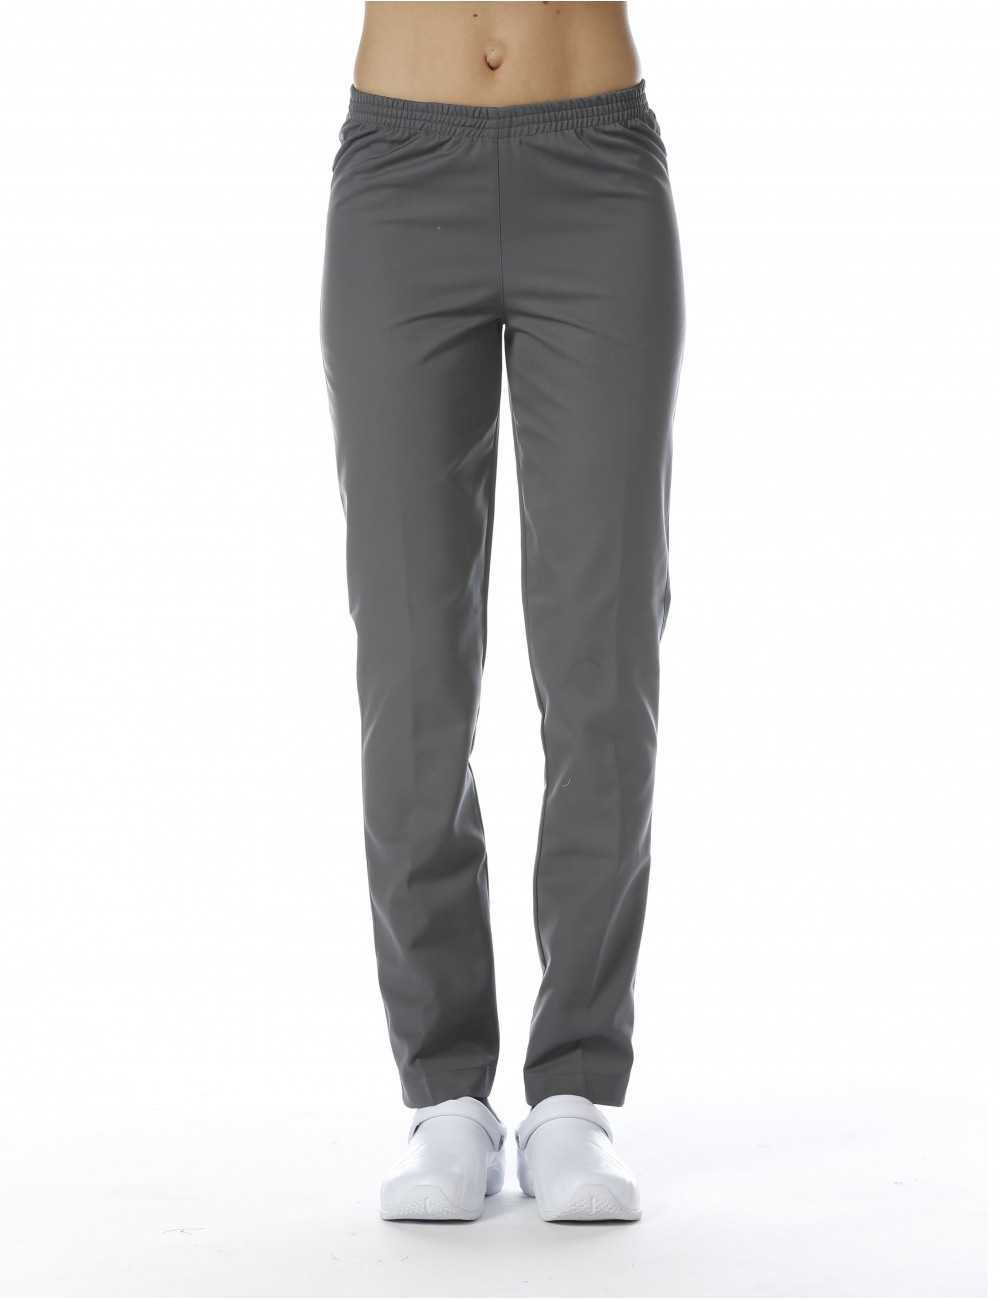 Grey Medical Pants, Unisex, Elastic waistband, Camille Lavandie (078VGR)